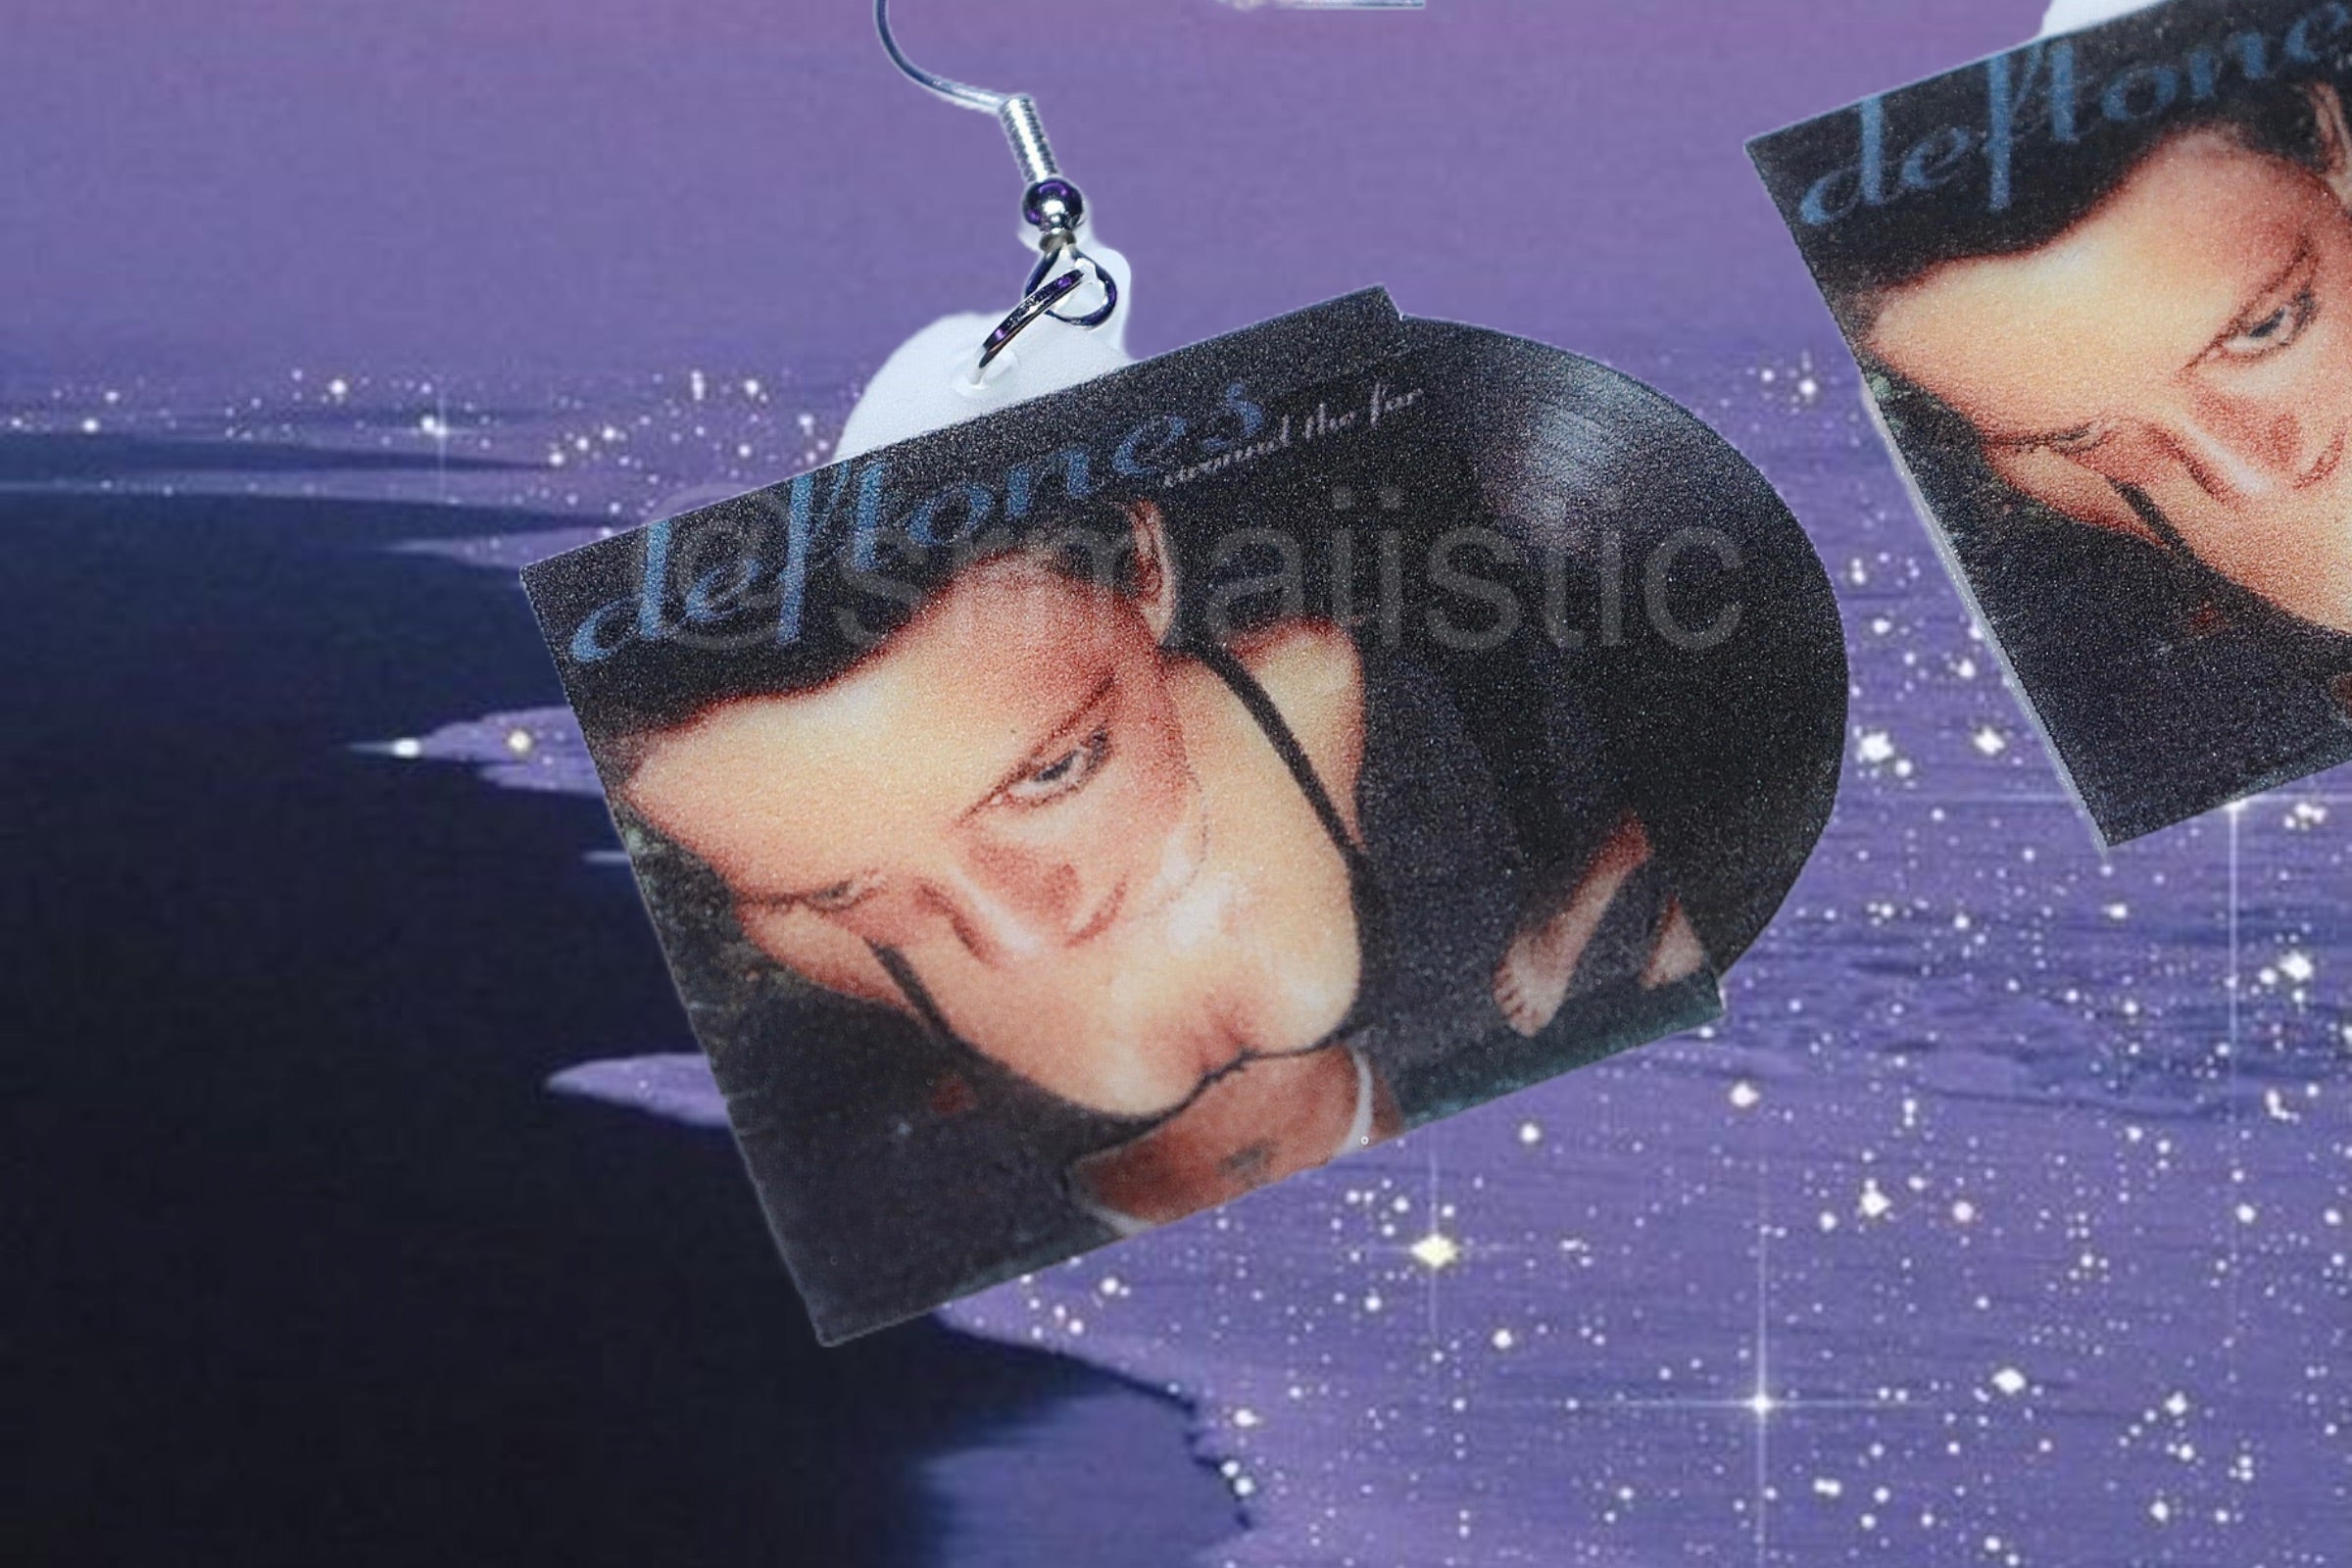 Deftones Around the Fur Vinyl Album Handmade Earrings!